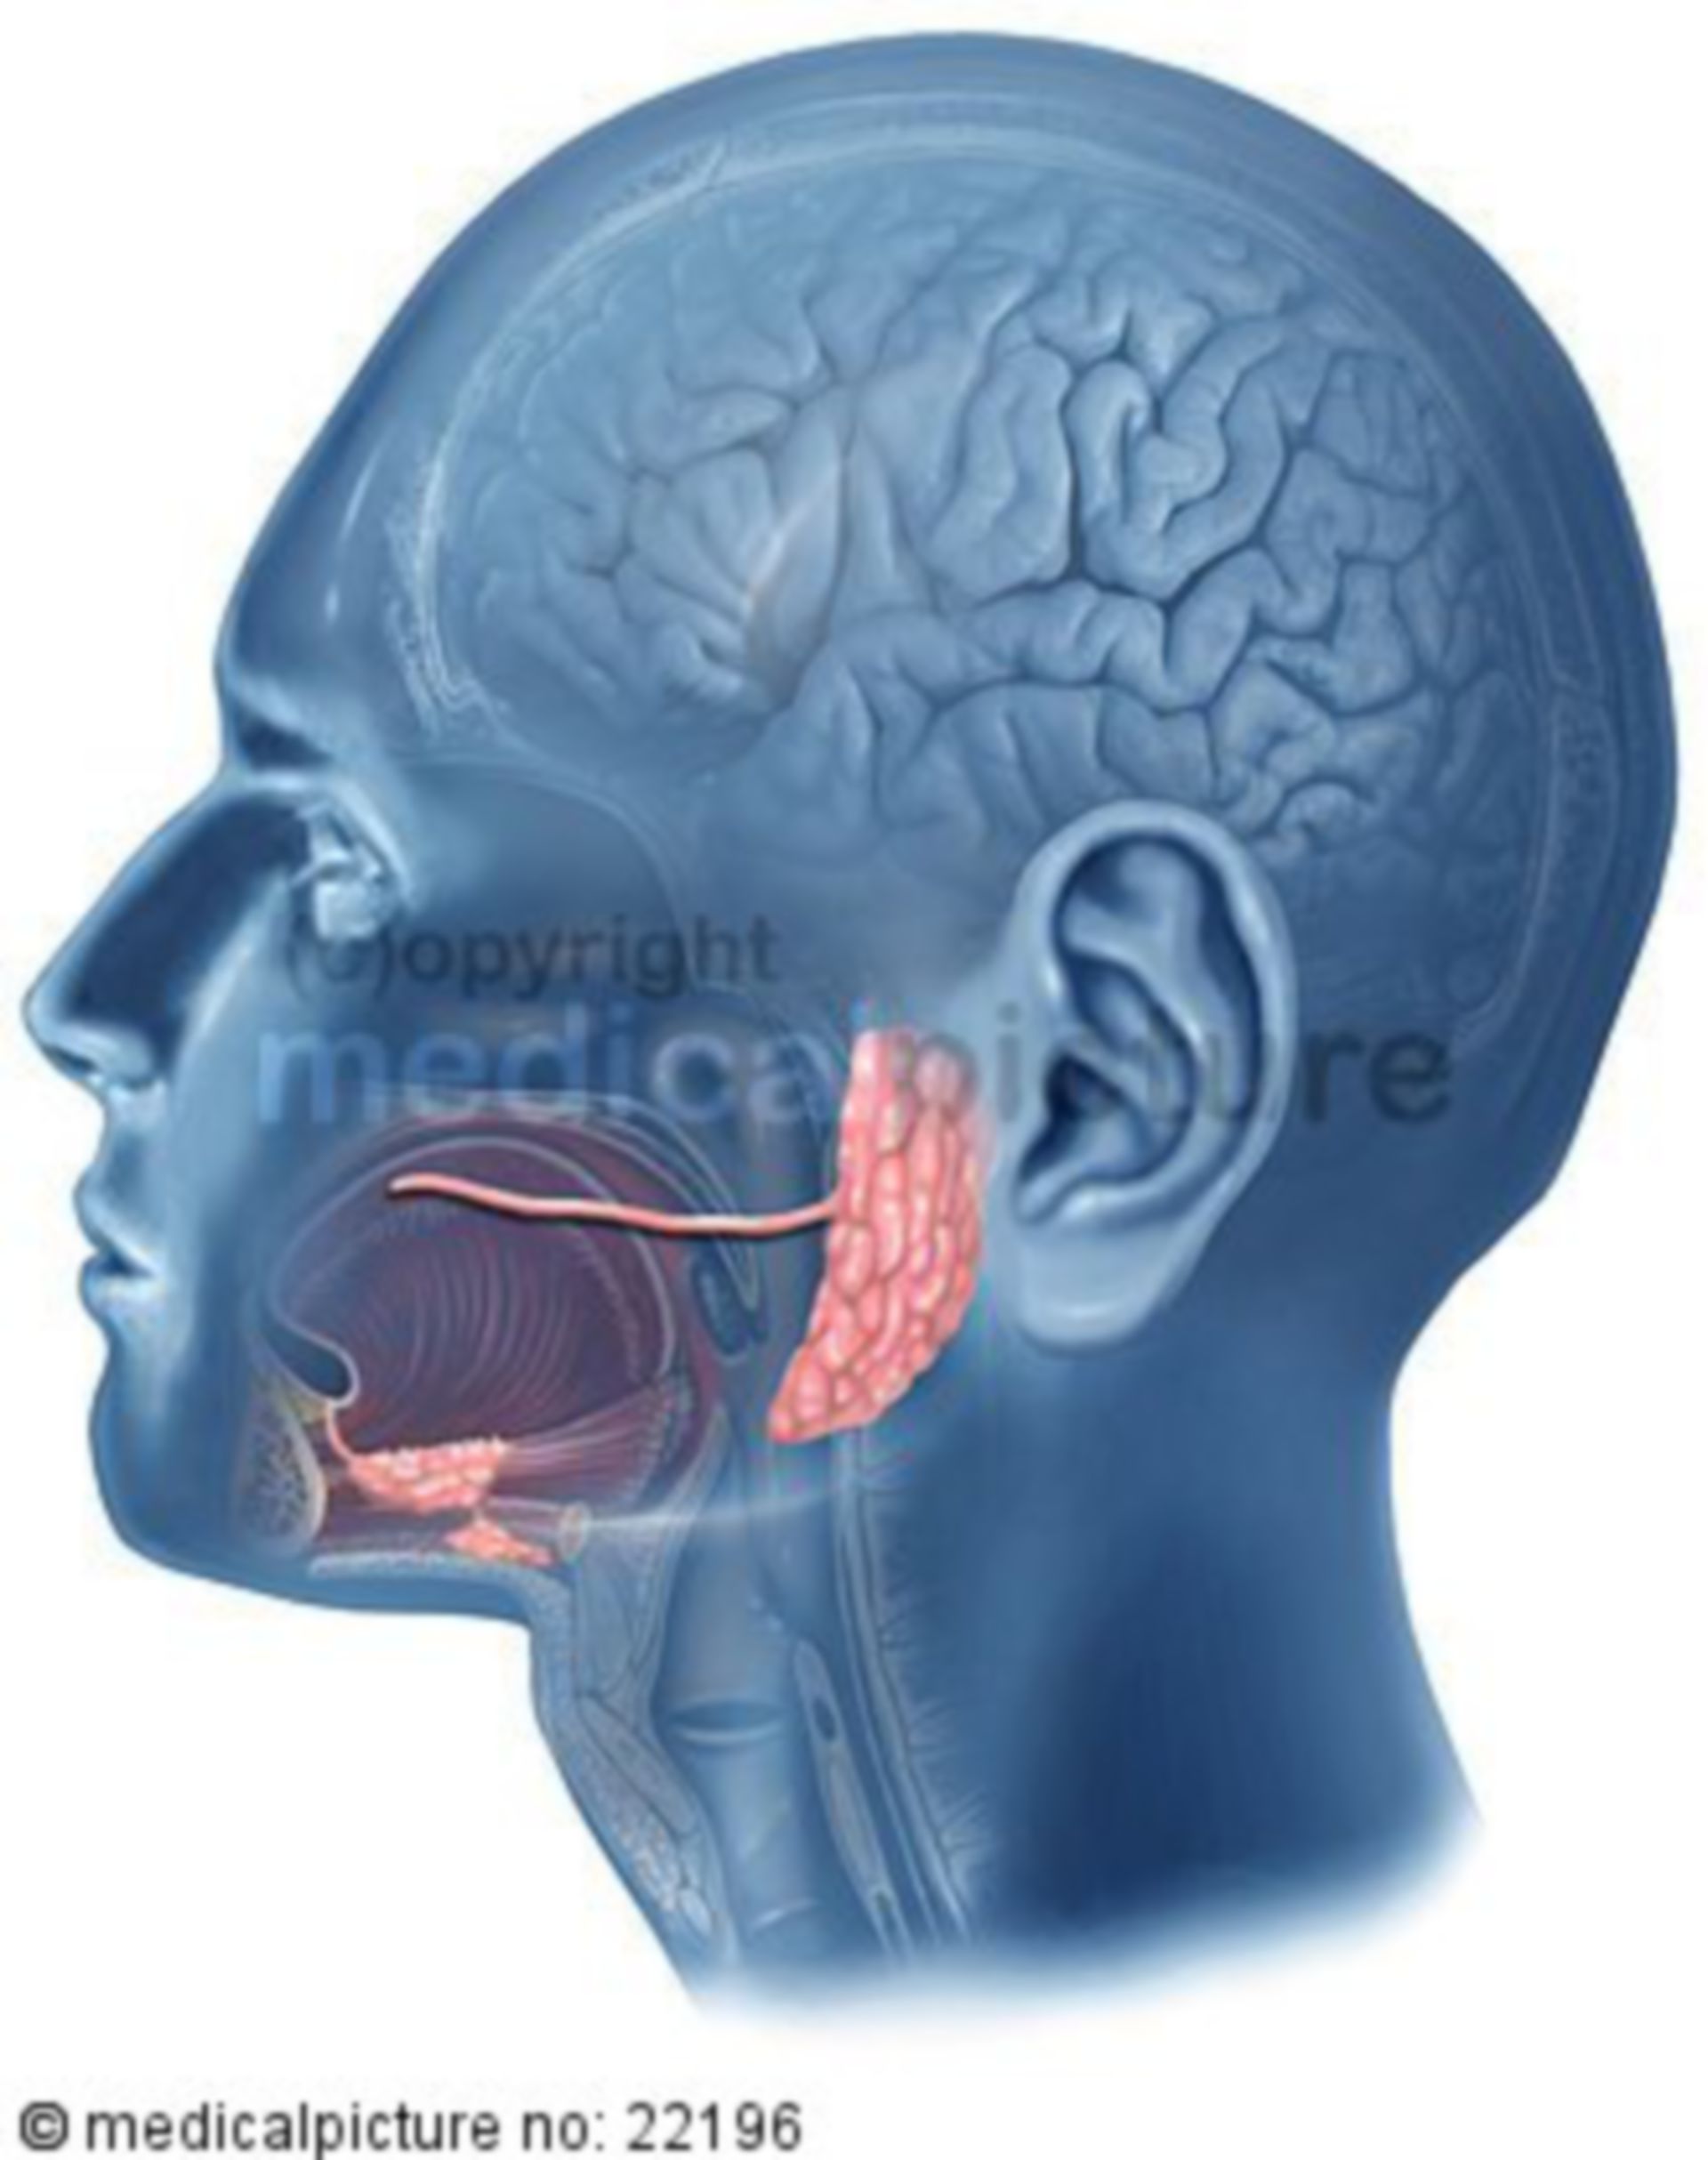 Salivary glands of the head